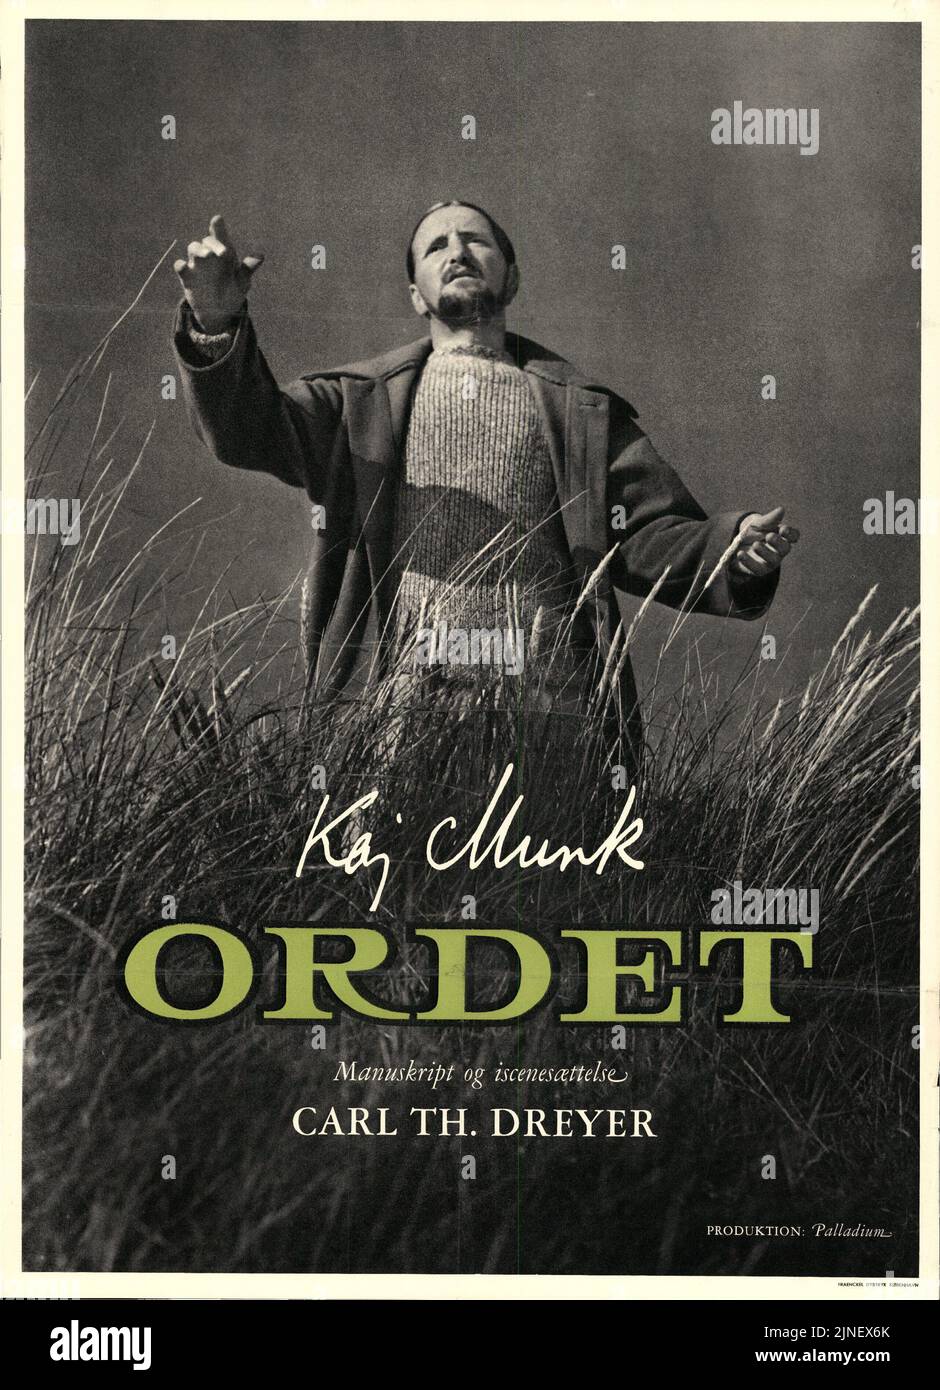 ORDET (1955), dirigida por CARL THEODOR DREYER. Crédito: Palladium Films / Album Foto de stock